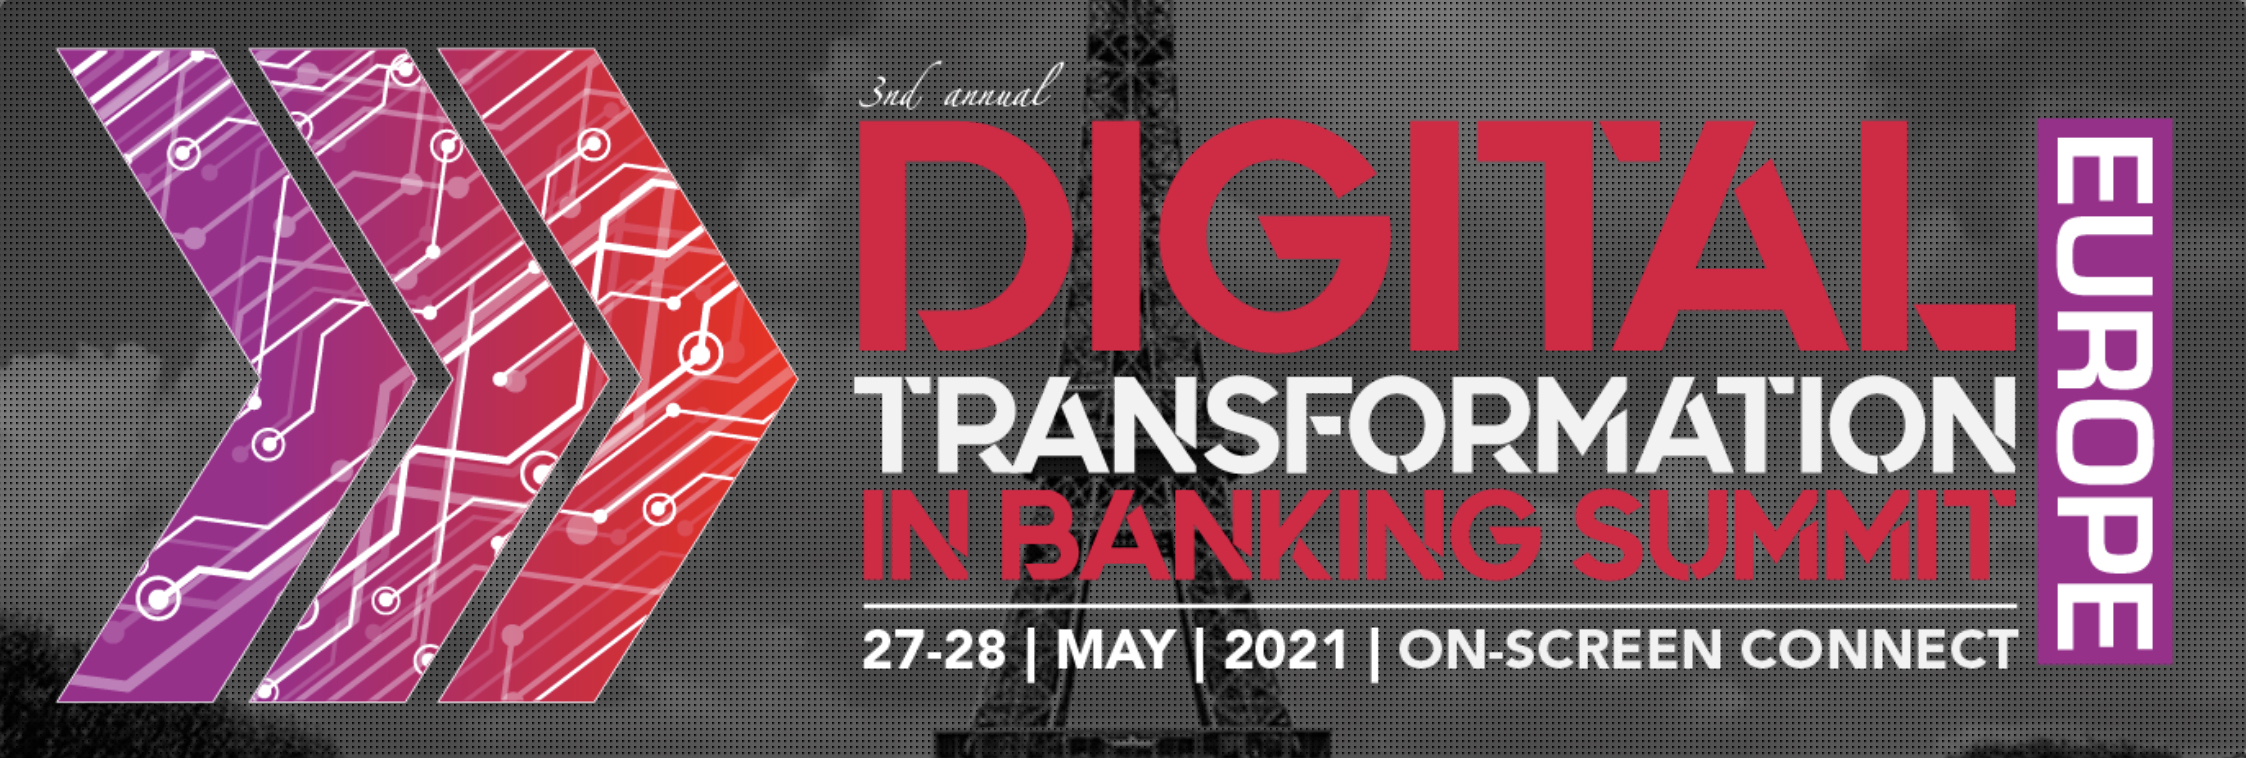 ebpSource at Digital Transformation Europe 2021